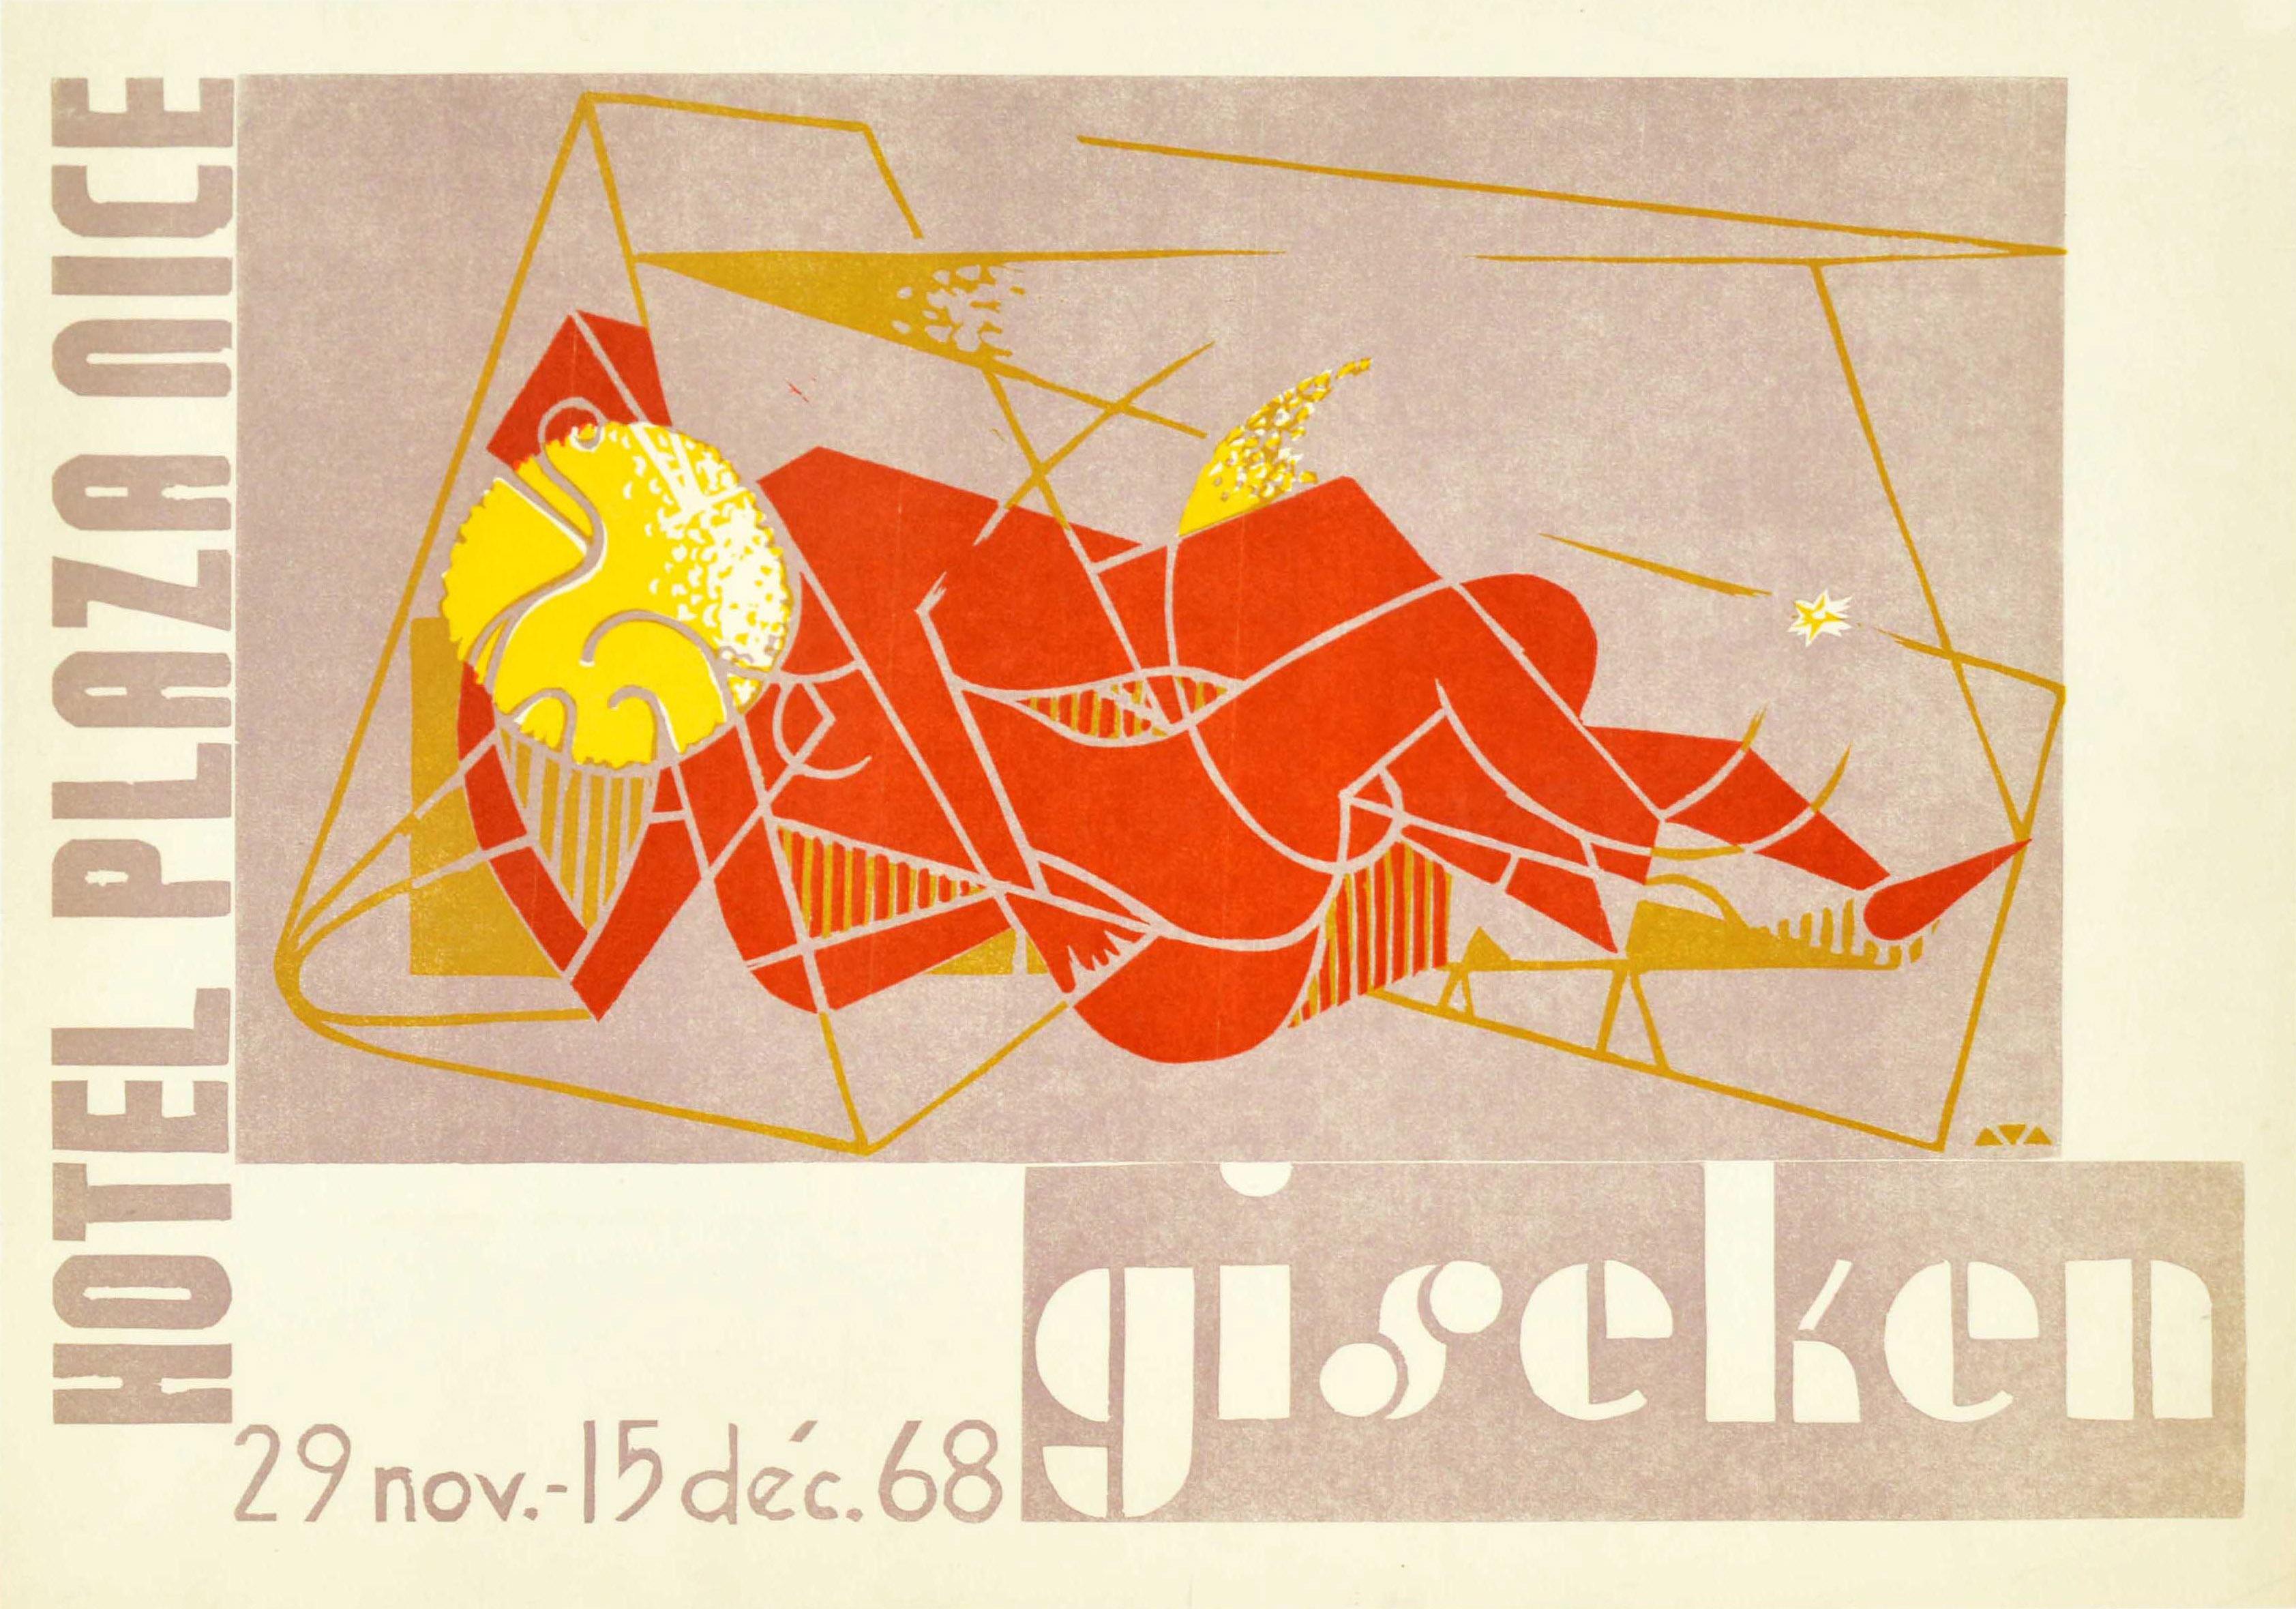 Georgi Giseken Print - Original Vintage Art Exhibition Poster Giseken Hotel Plaza Nice Abstract Design